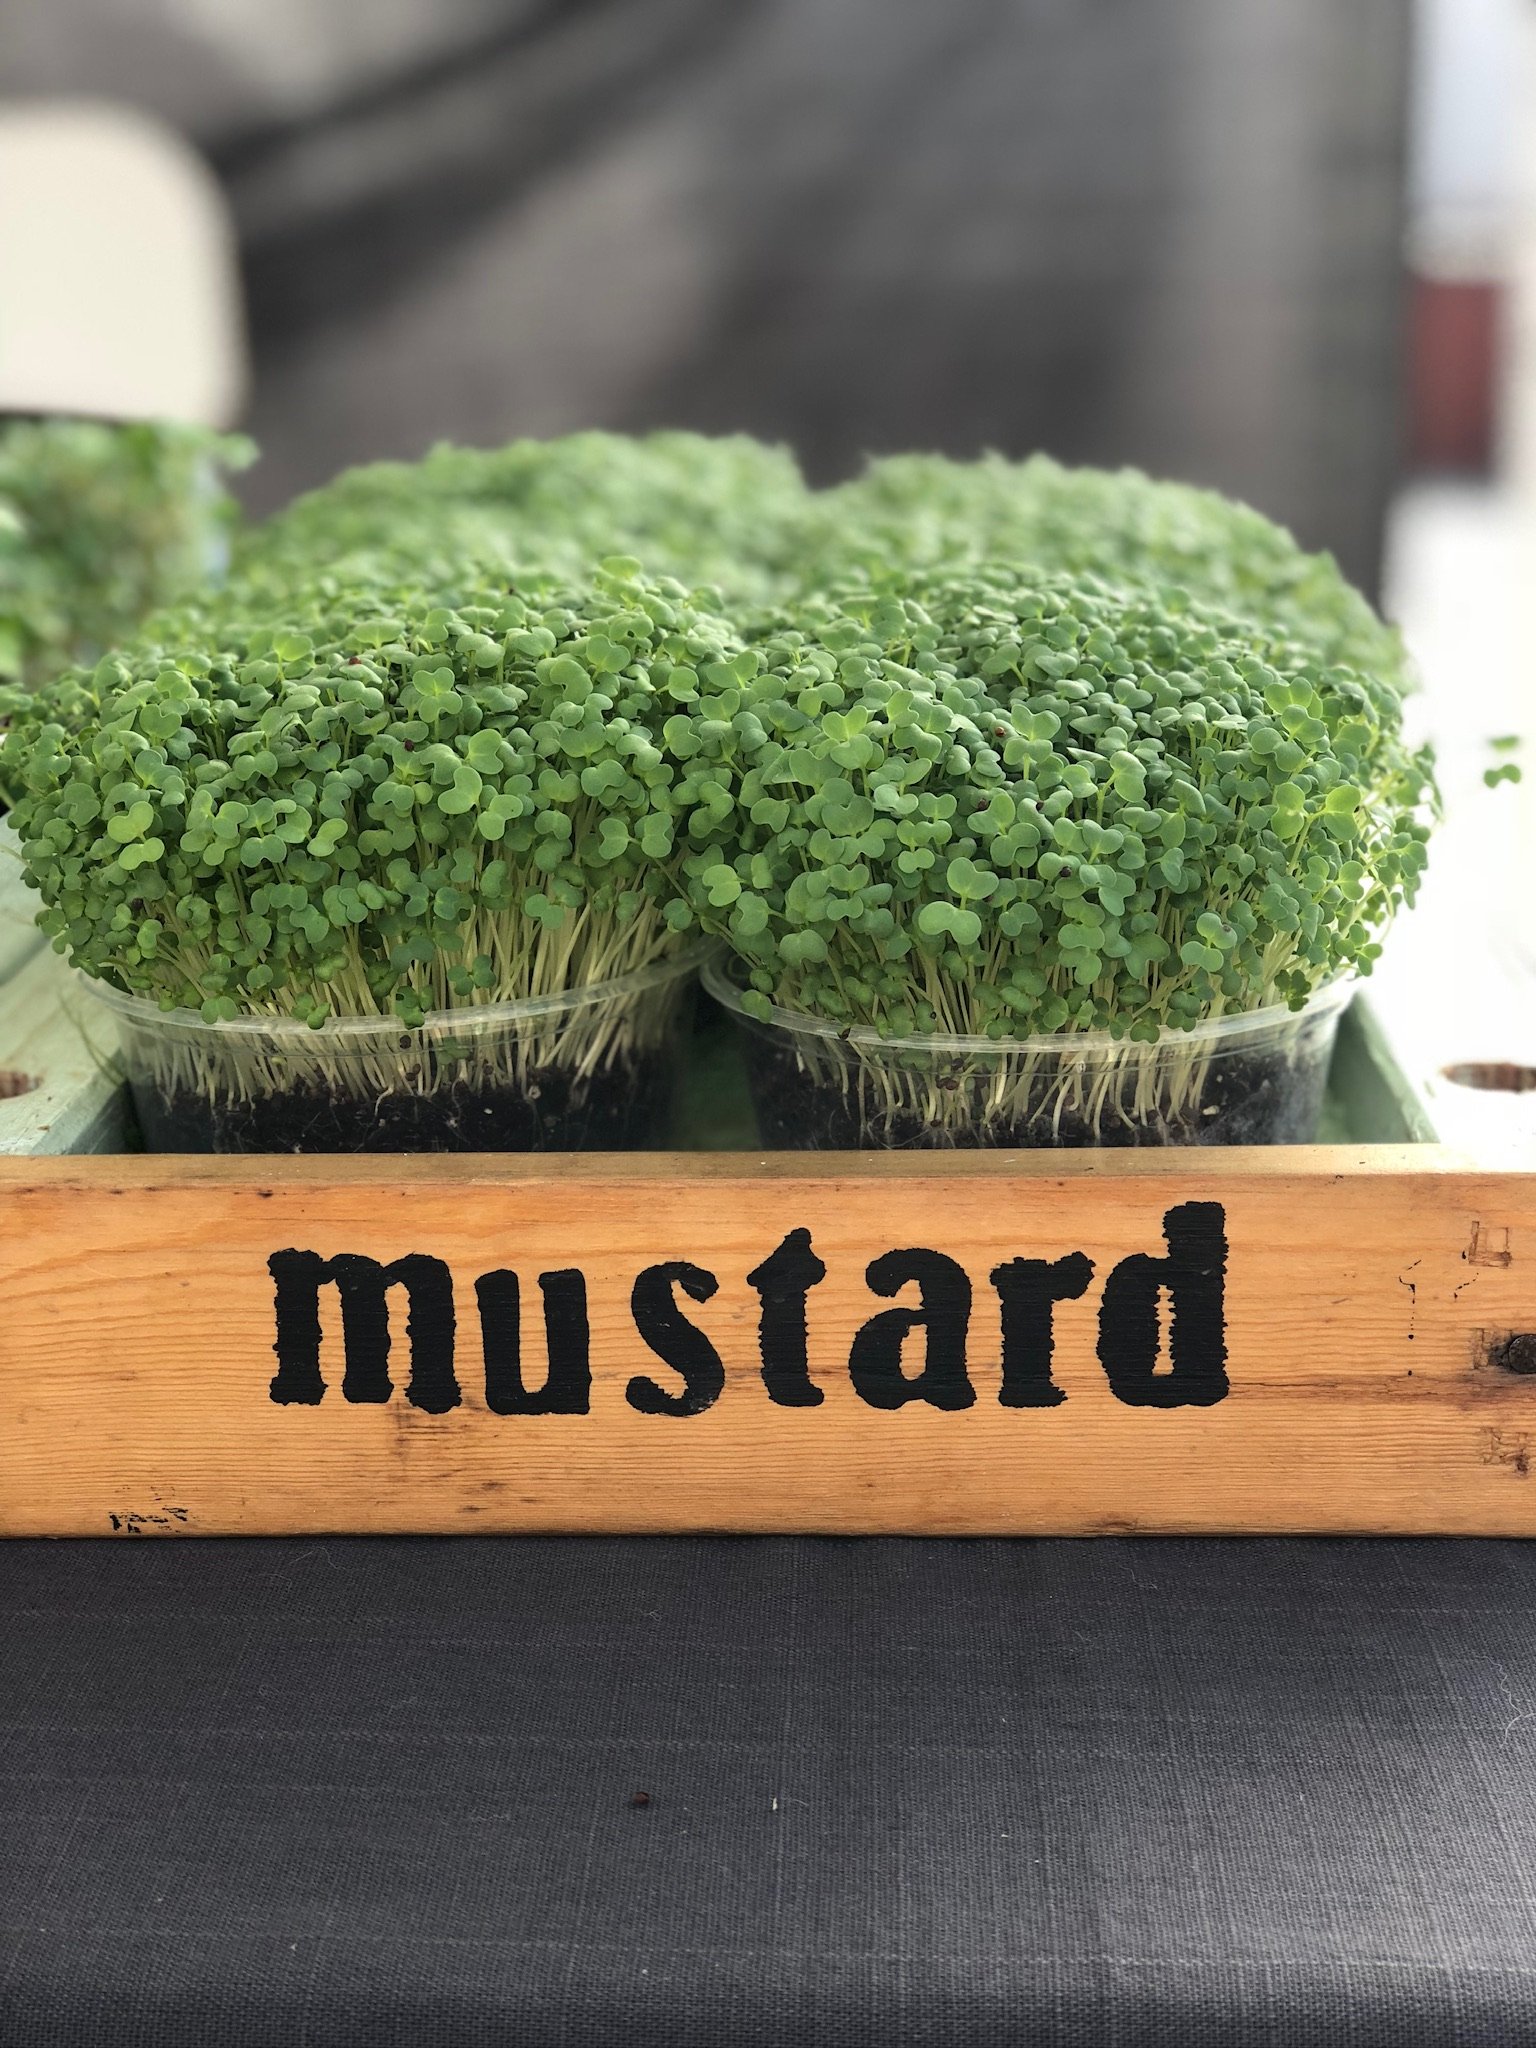 All About Mustard Microgreens (Intense Mustardy Flavor)